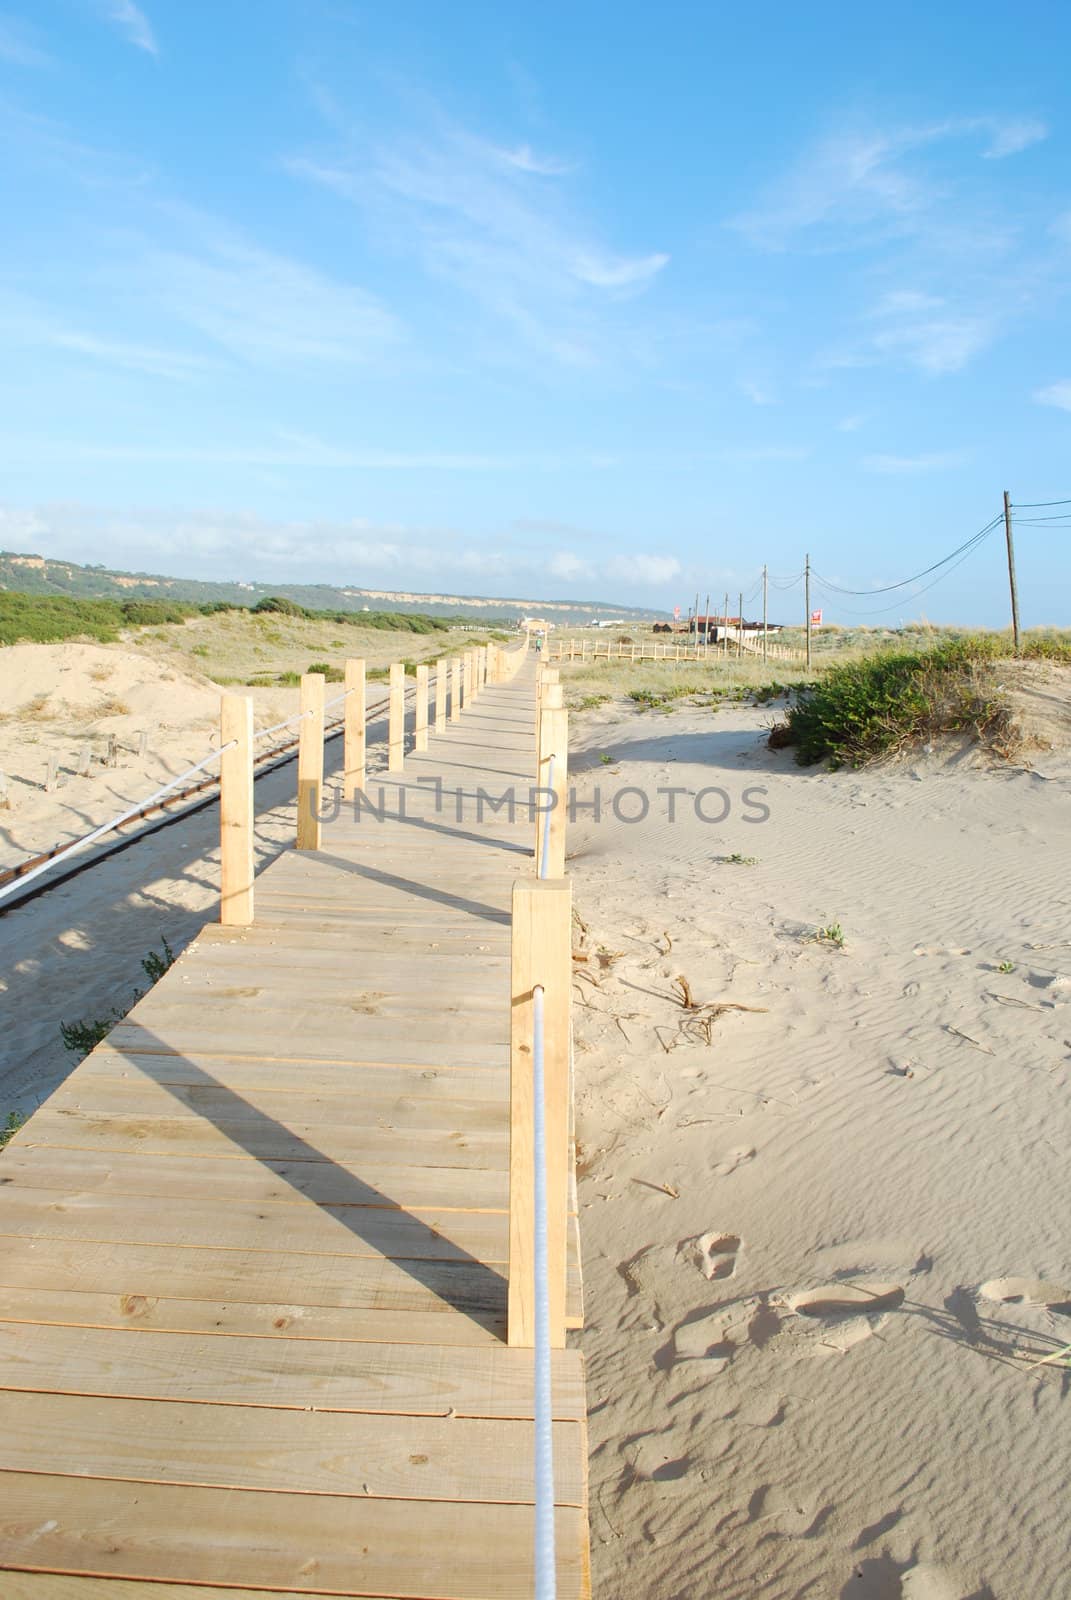 Boardwalk entering the beach by luissantos84